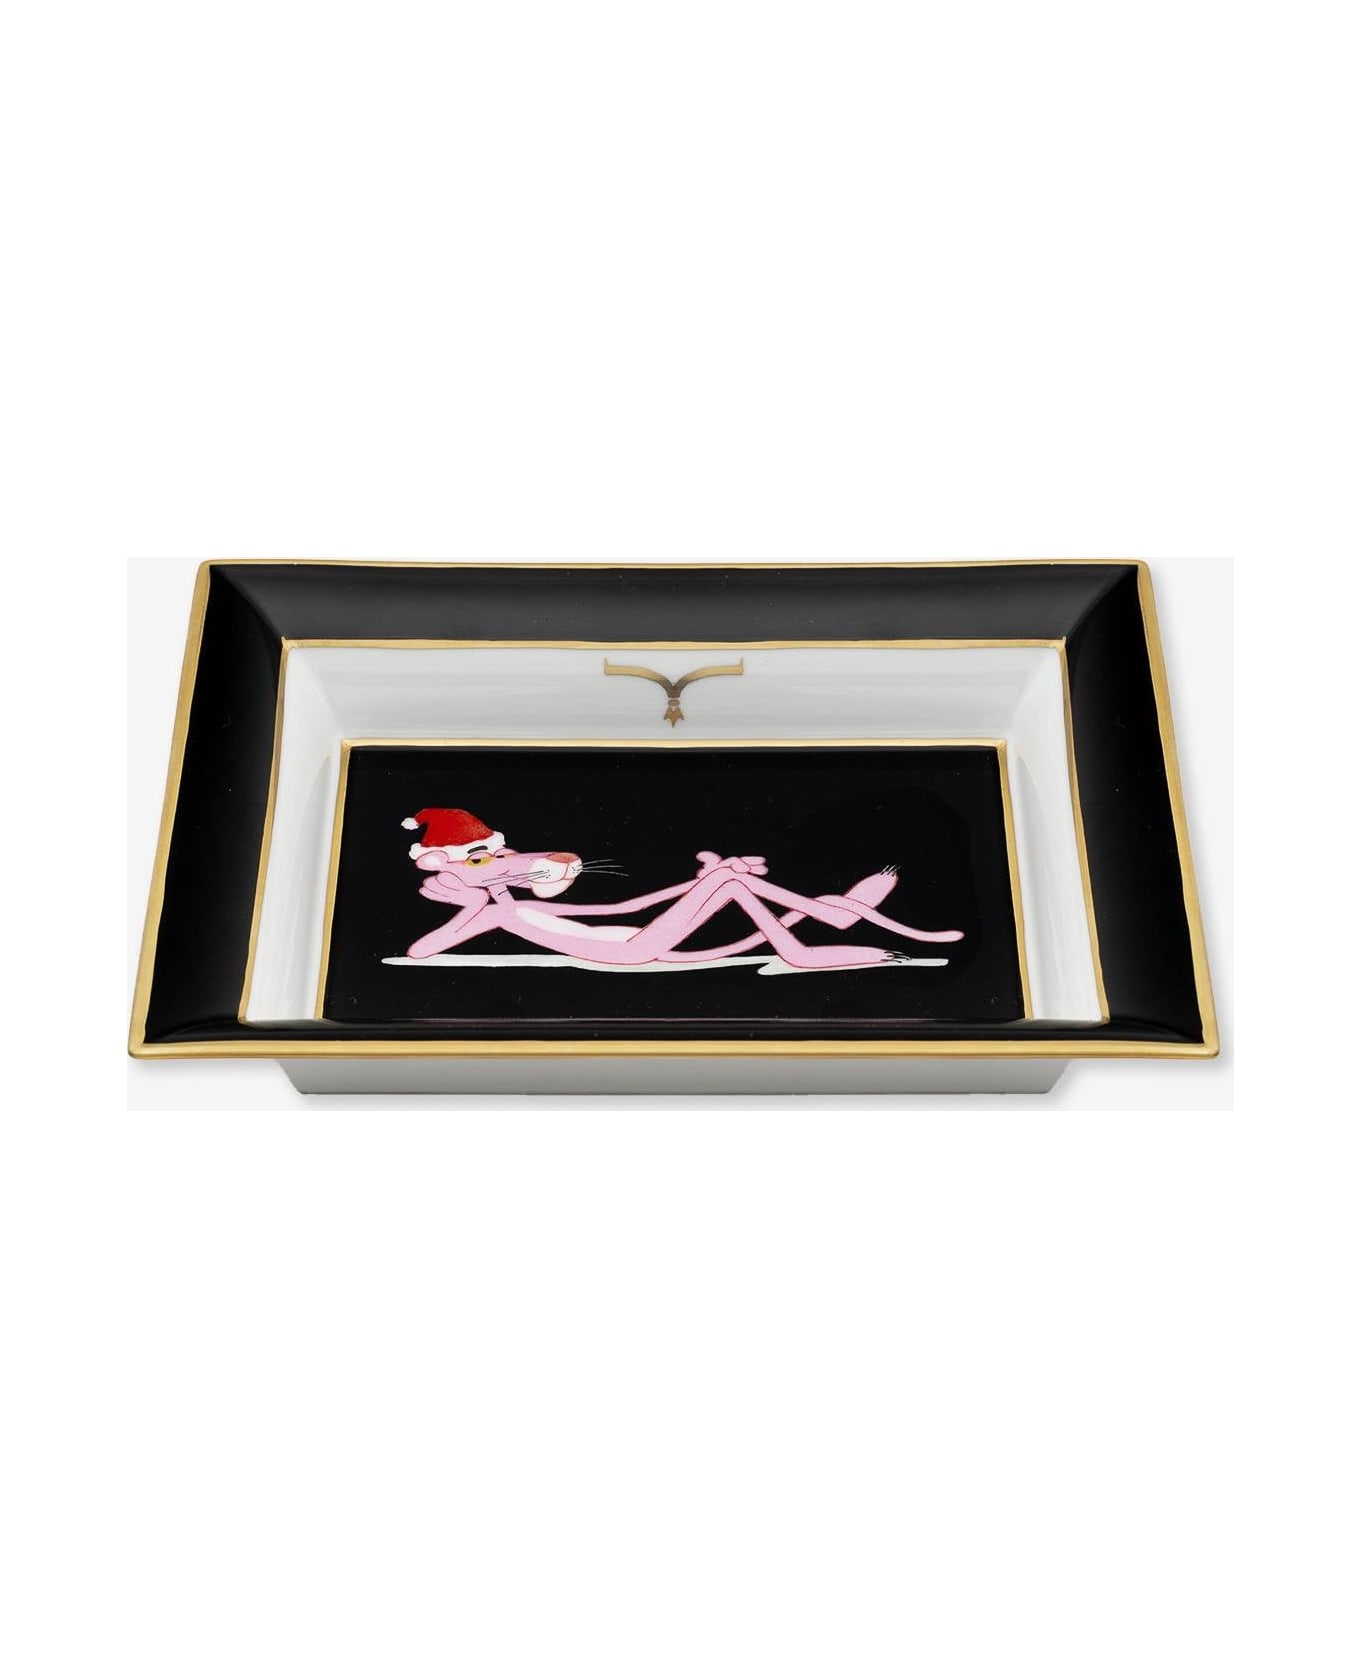 Larusmiani Pocket Emptier Pink Panther Christmas Tray - Black